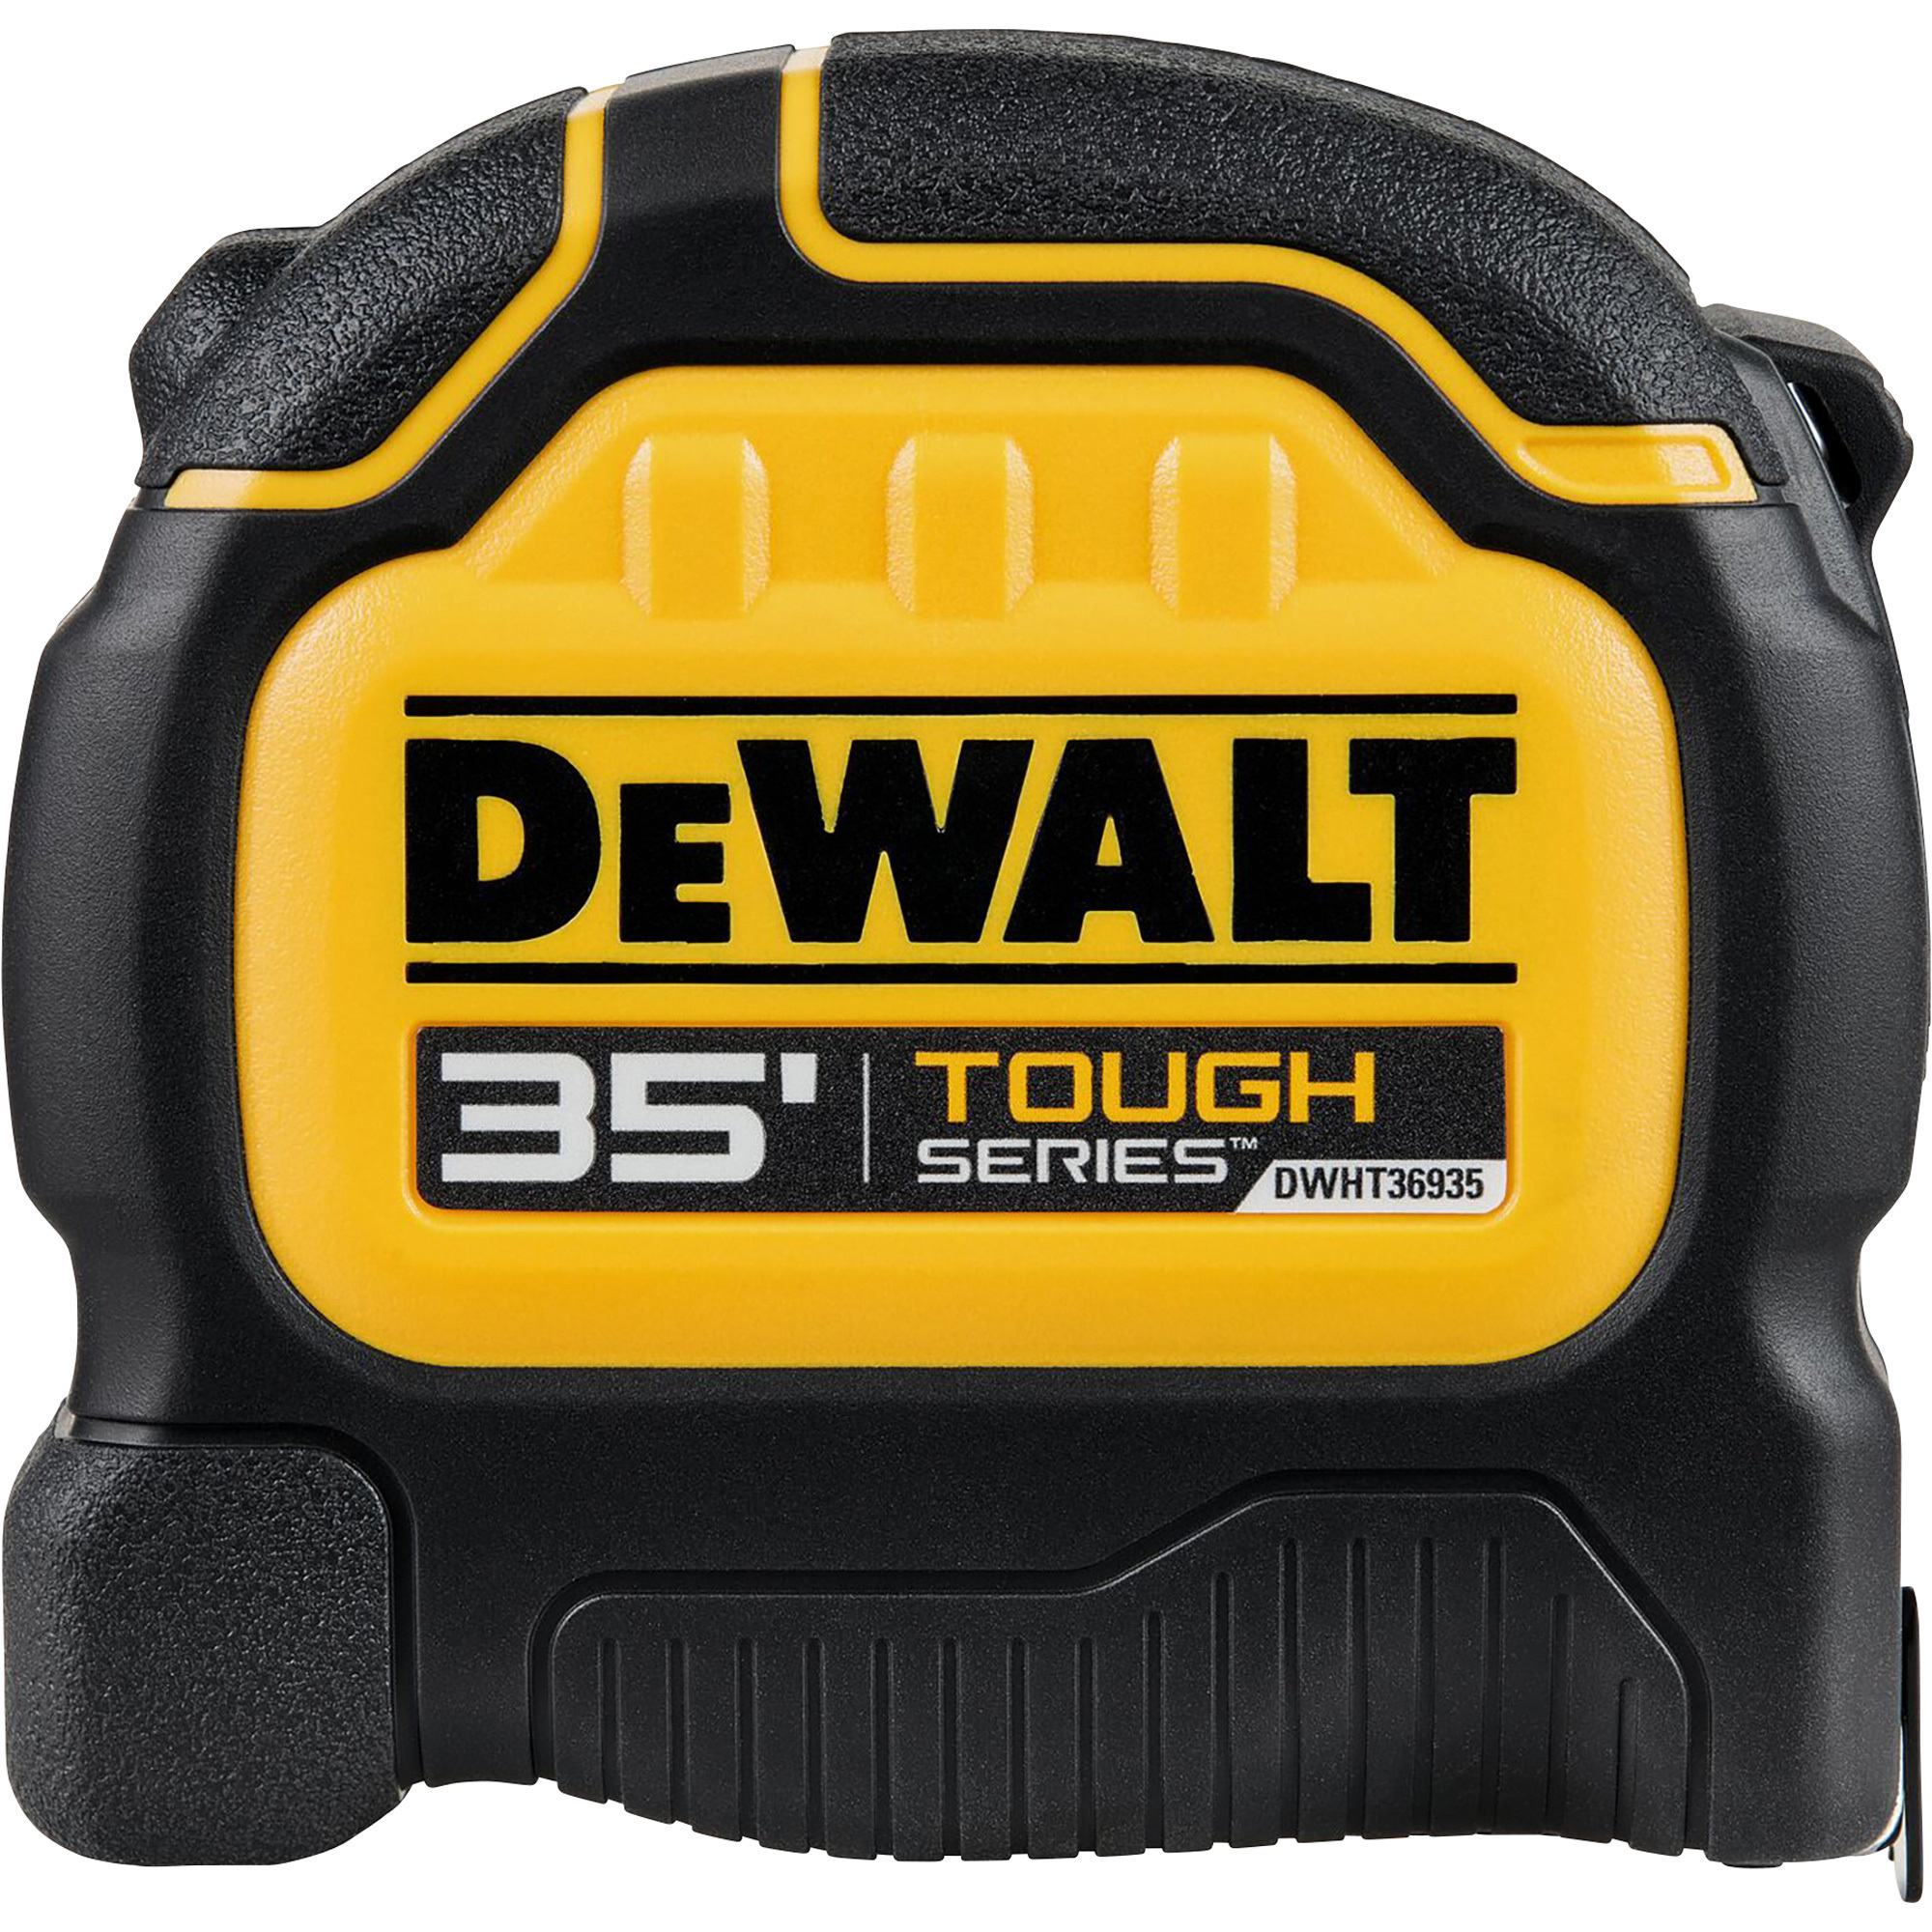 DEWALT Tough Series Tape Measure, 35ft., Model DWHT36935S